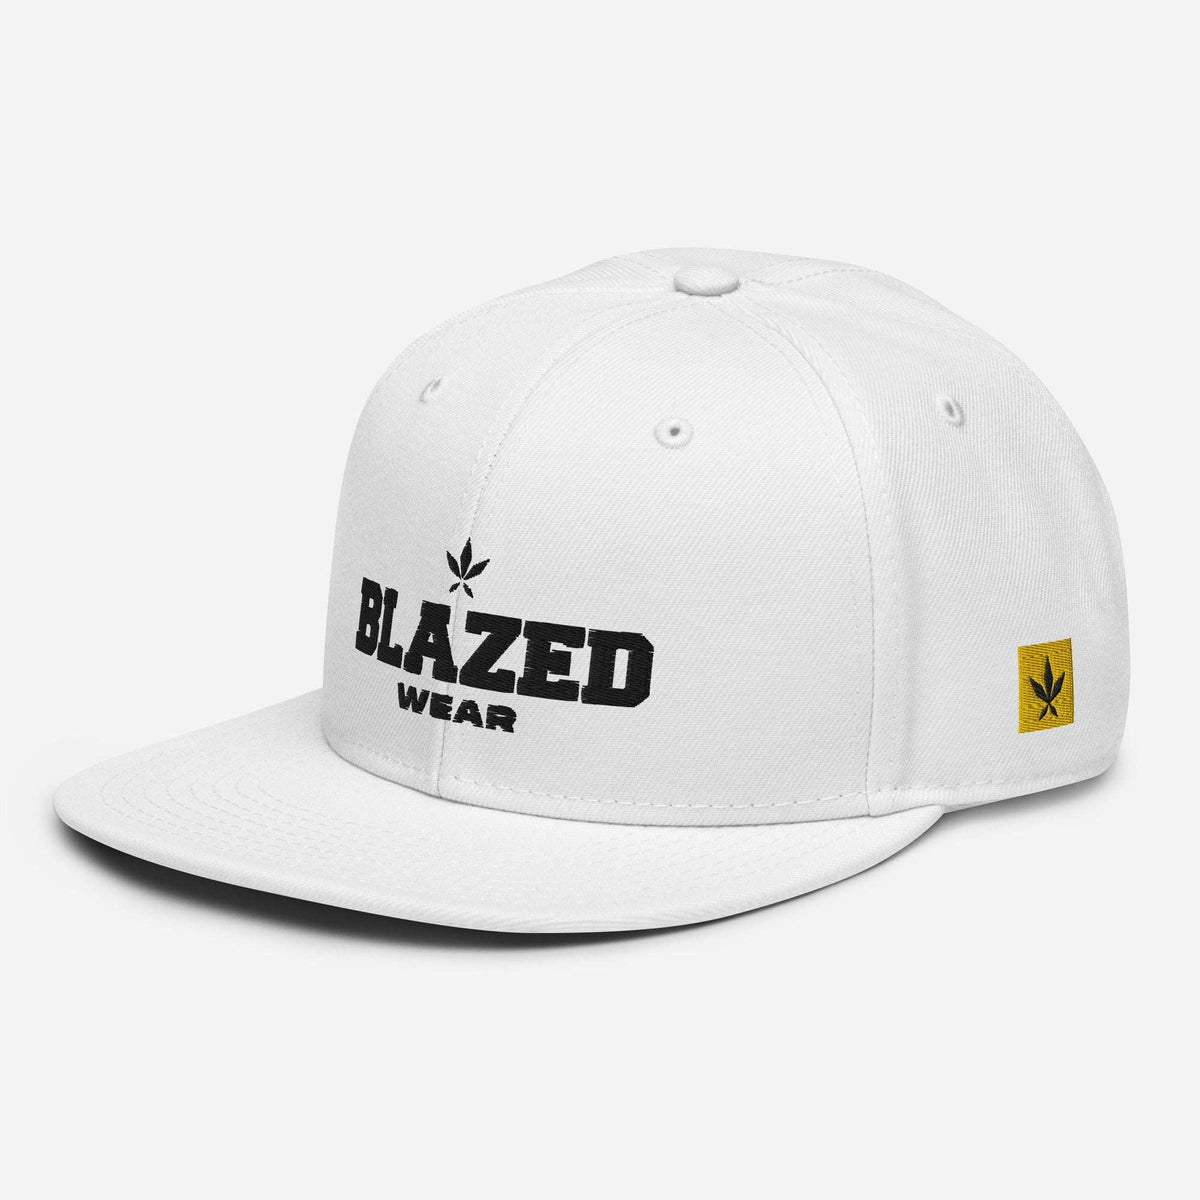 Blazed Leaf Snapback Hat - White/Gold - Blazed Wear